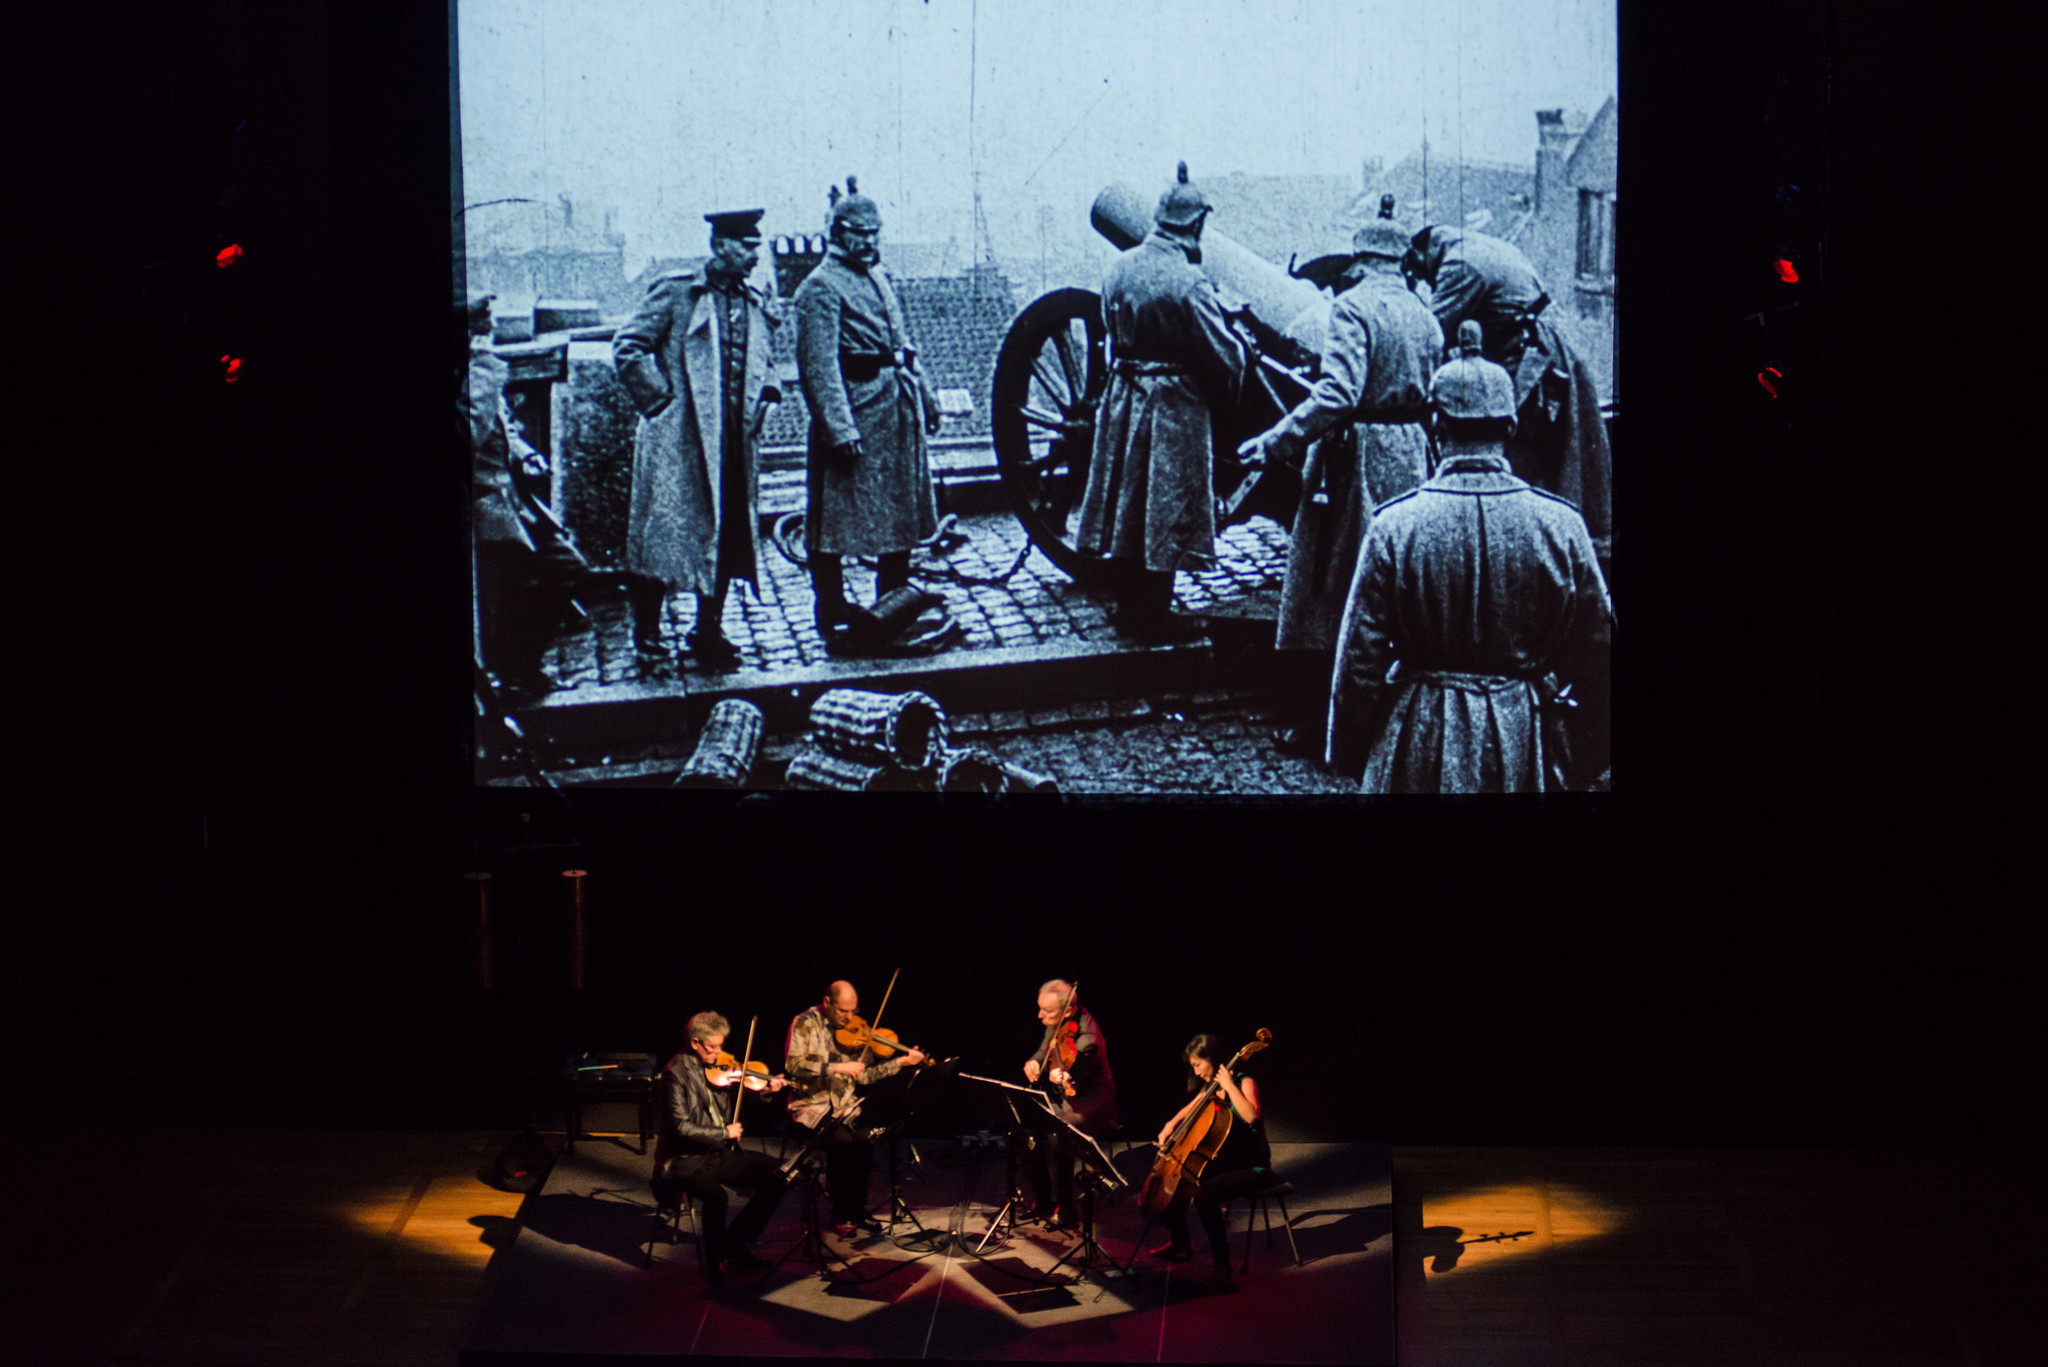 Kronos Quartet will perform Aleksandra Vrebalov's "Beyond Zero: 1914-1918" accompanied by a Bill Morrison film of World War I footage.